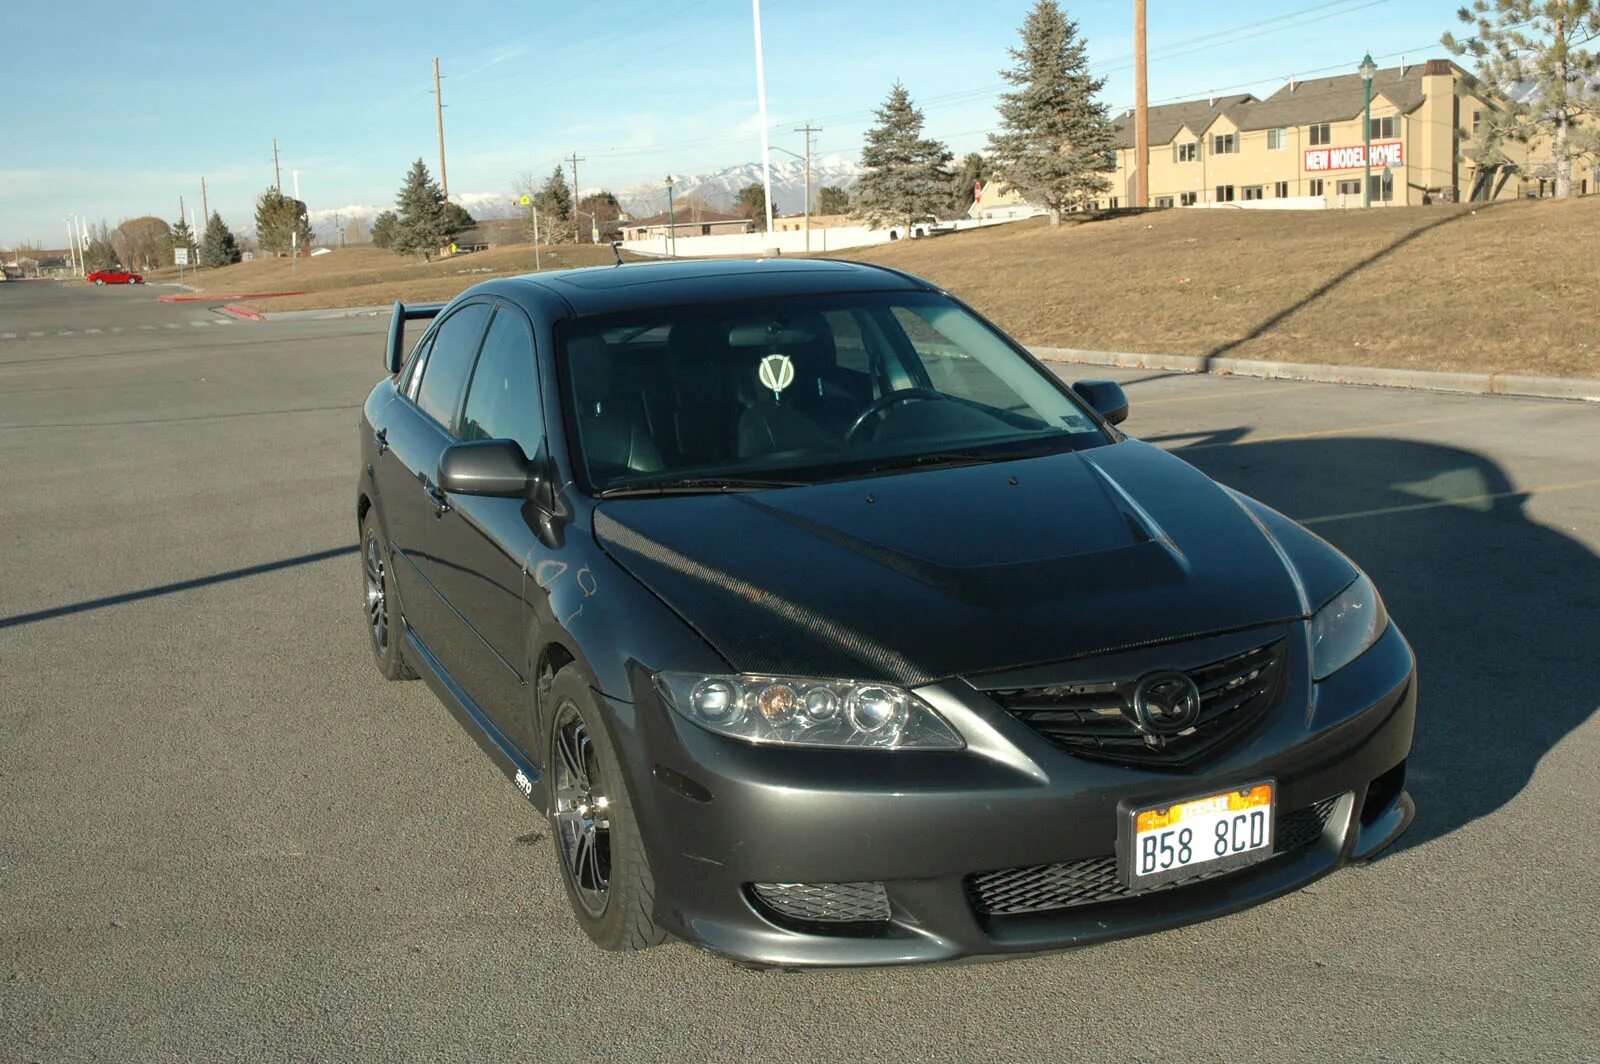 Мазда 6 2003 gg. Mazda 6 2005. Мазда 6 gg 2003. Mazda 6 Atenza. Mazda 6 2005 черная.